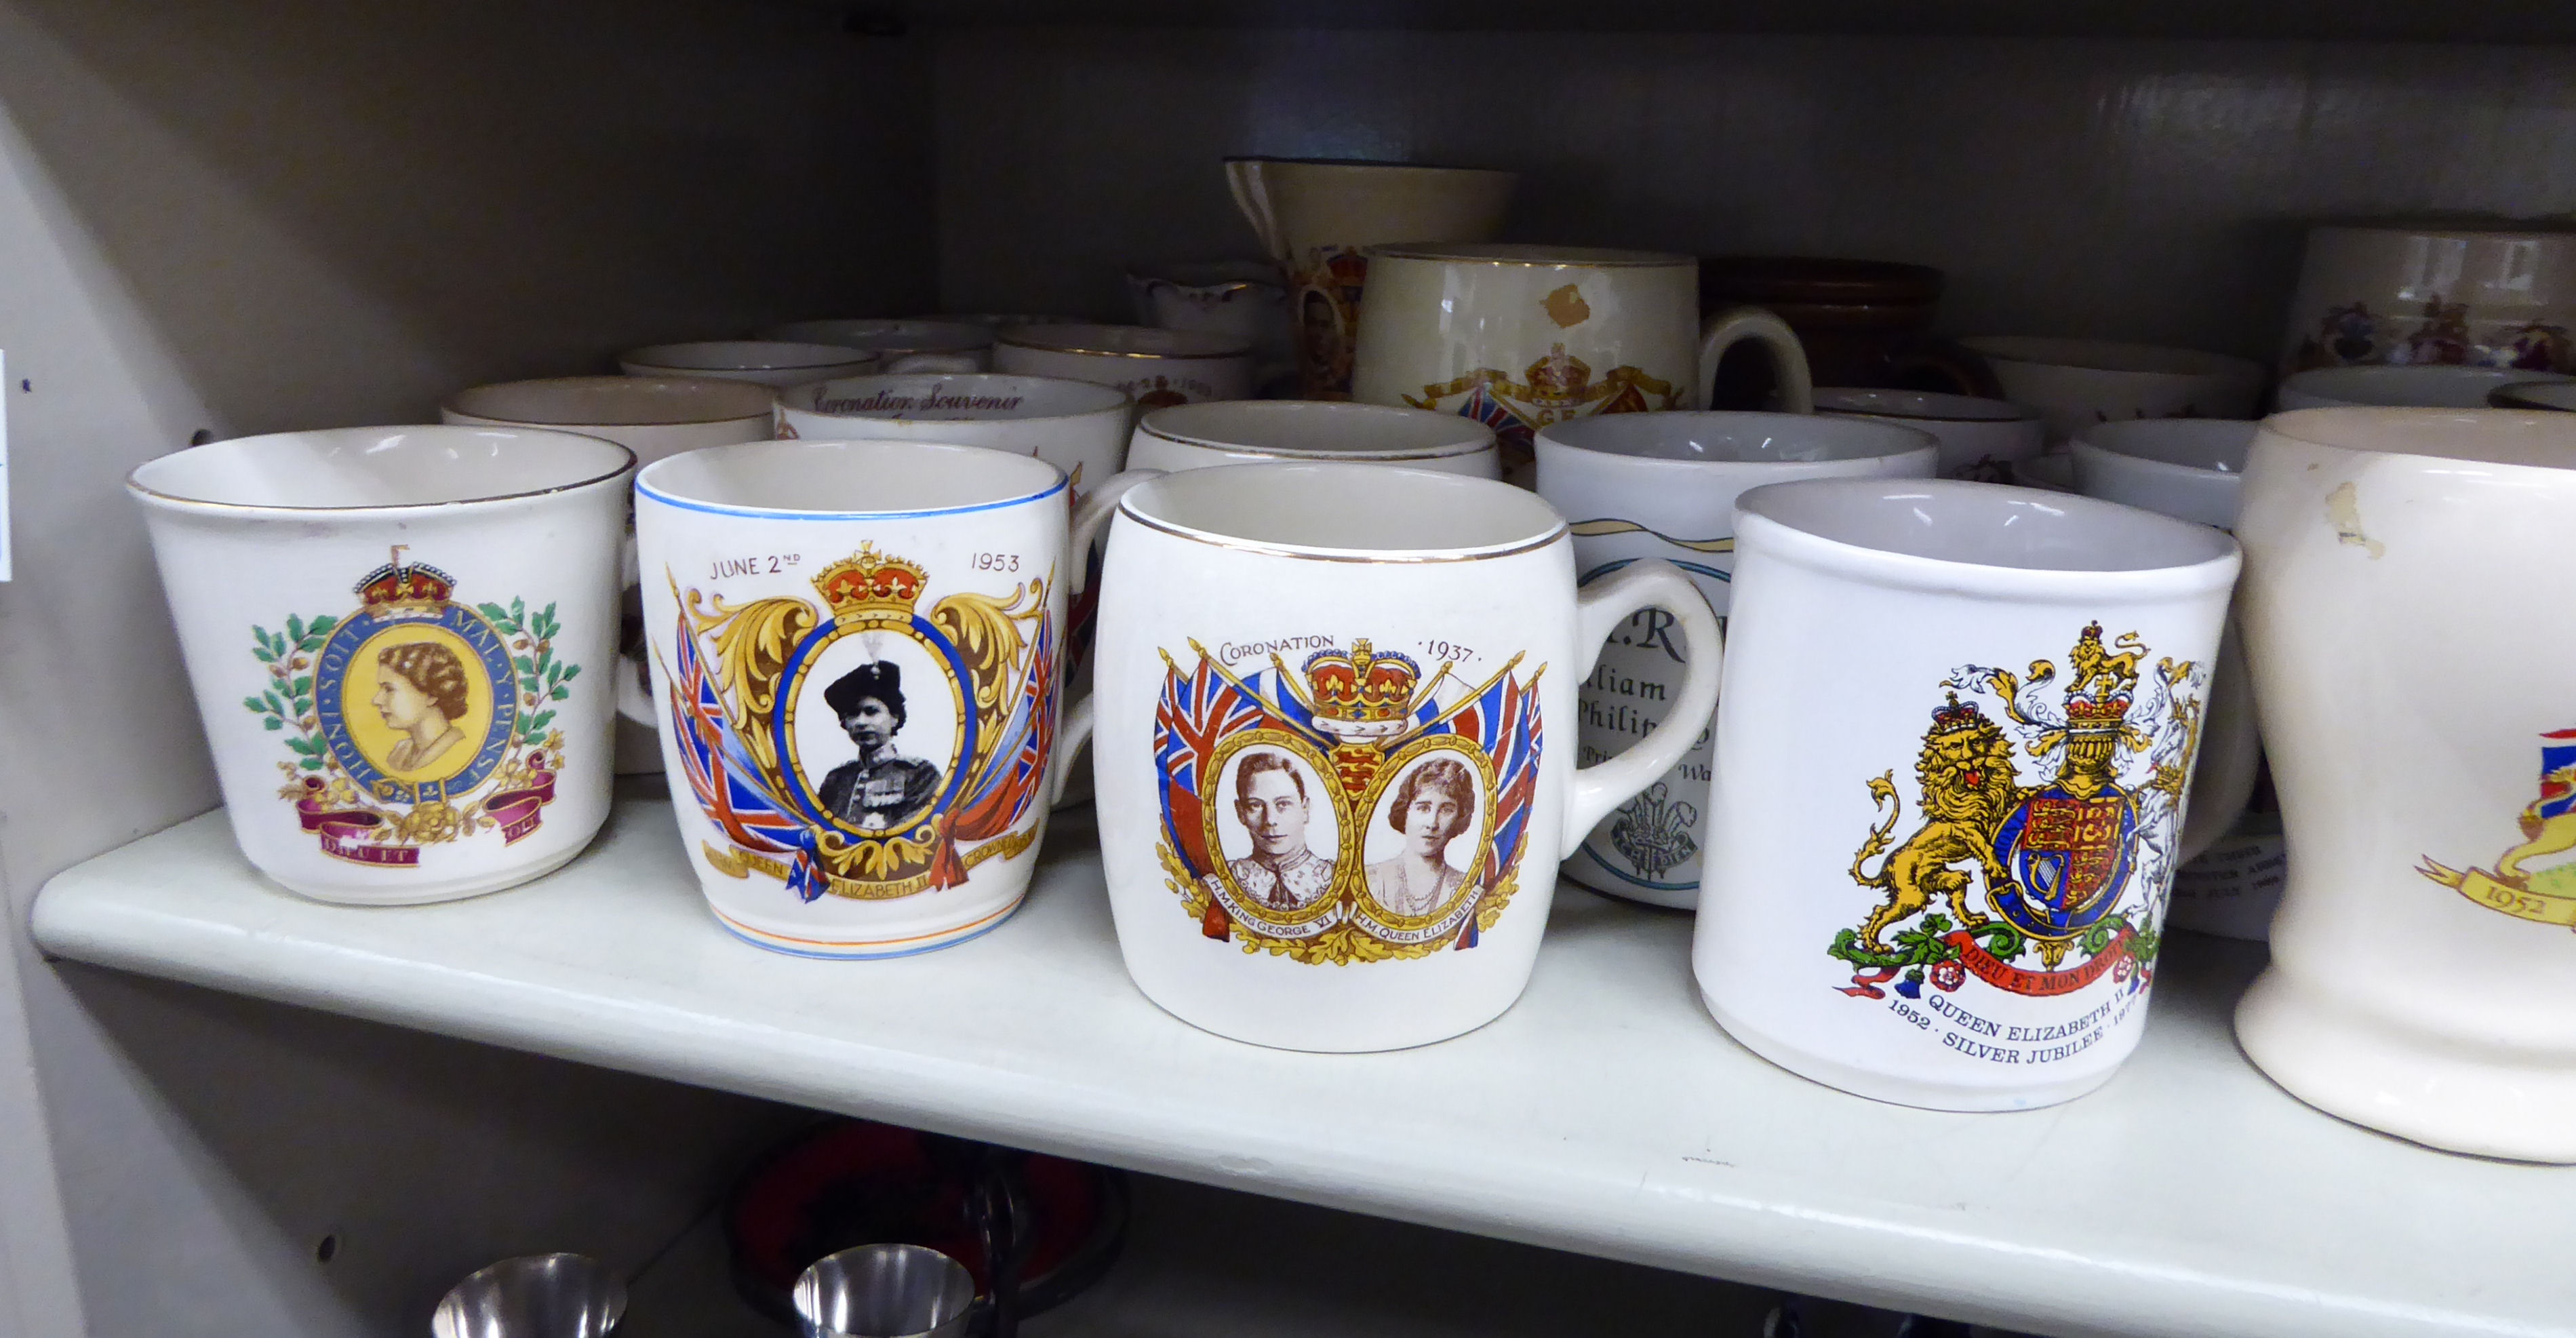 Commemorative ceramics: to include Queen Elizabeth II Silver Jubilee china mugs OS1